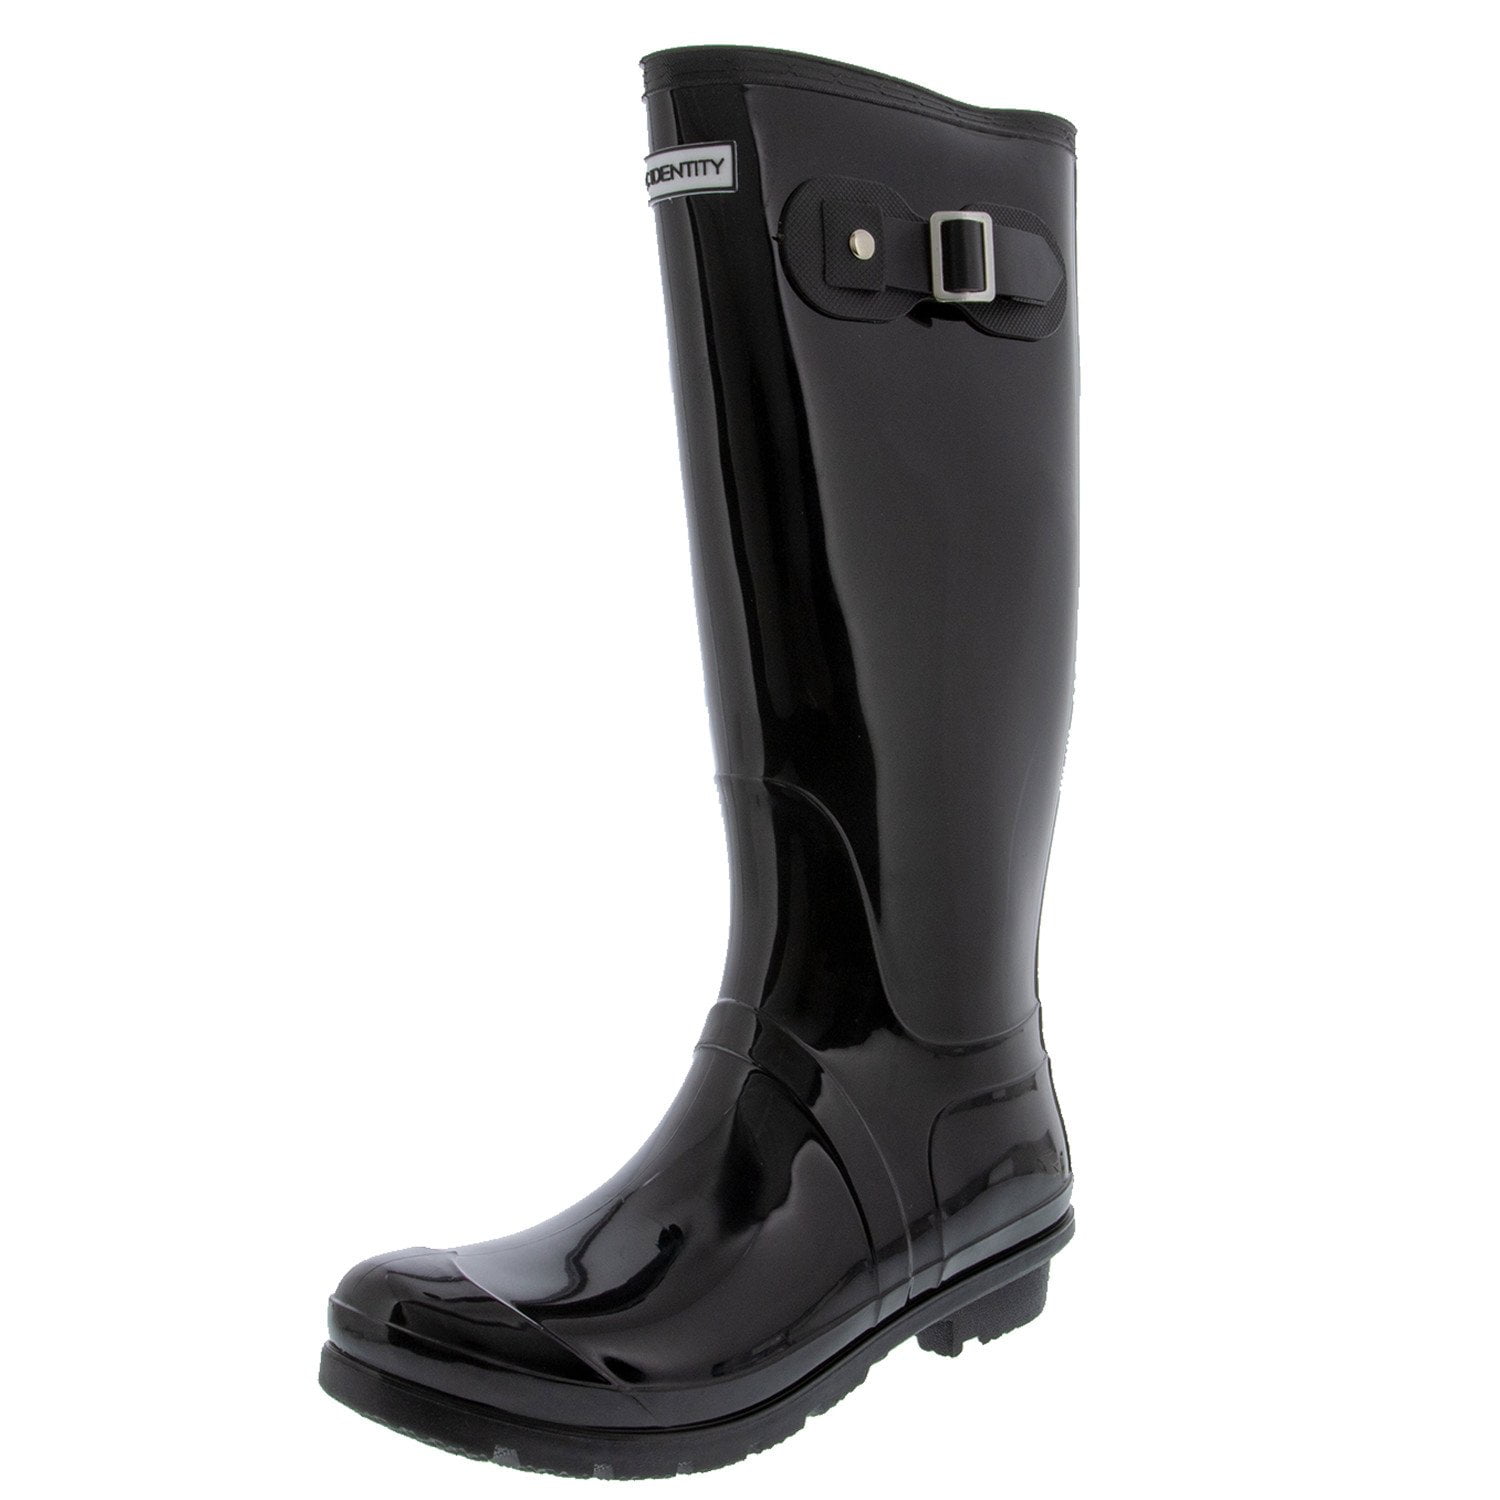 Exotic Identity Original Tall Rain Boots, Waterproof, PVC, Nonslip Sole ...